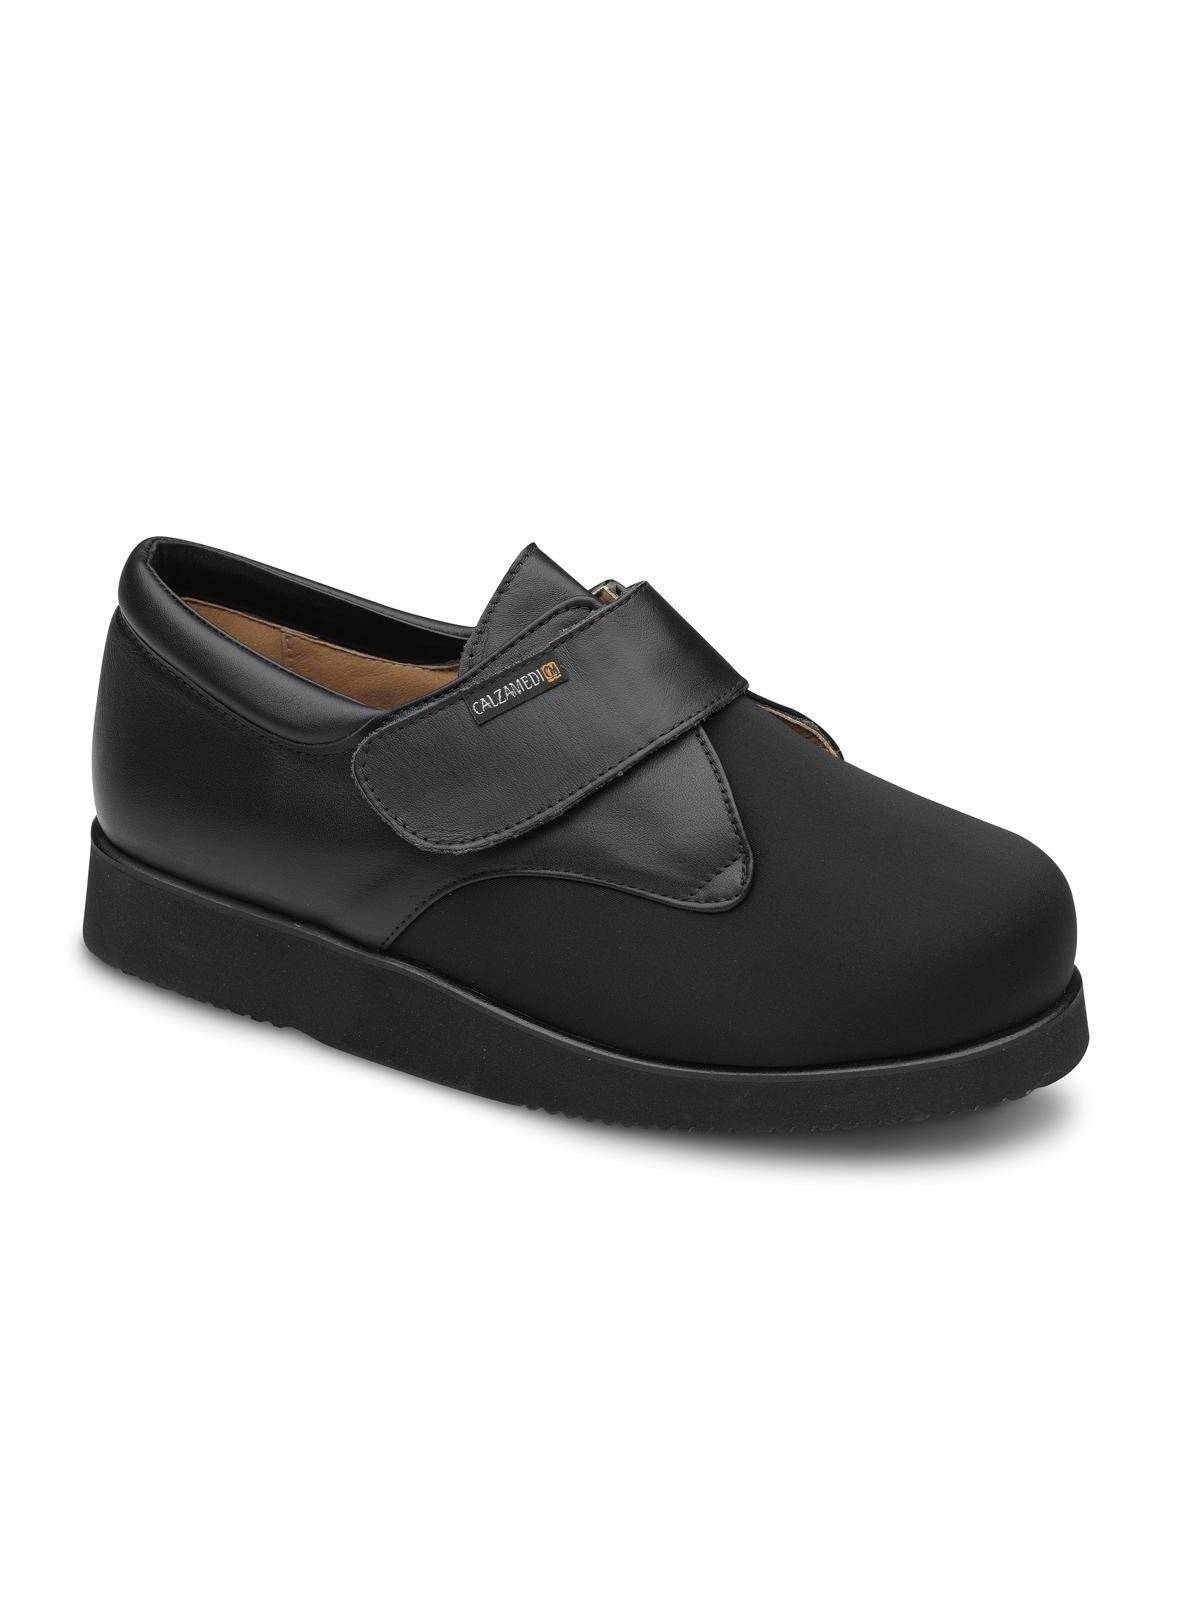 Zapatos Calzamedi 0008 Negro